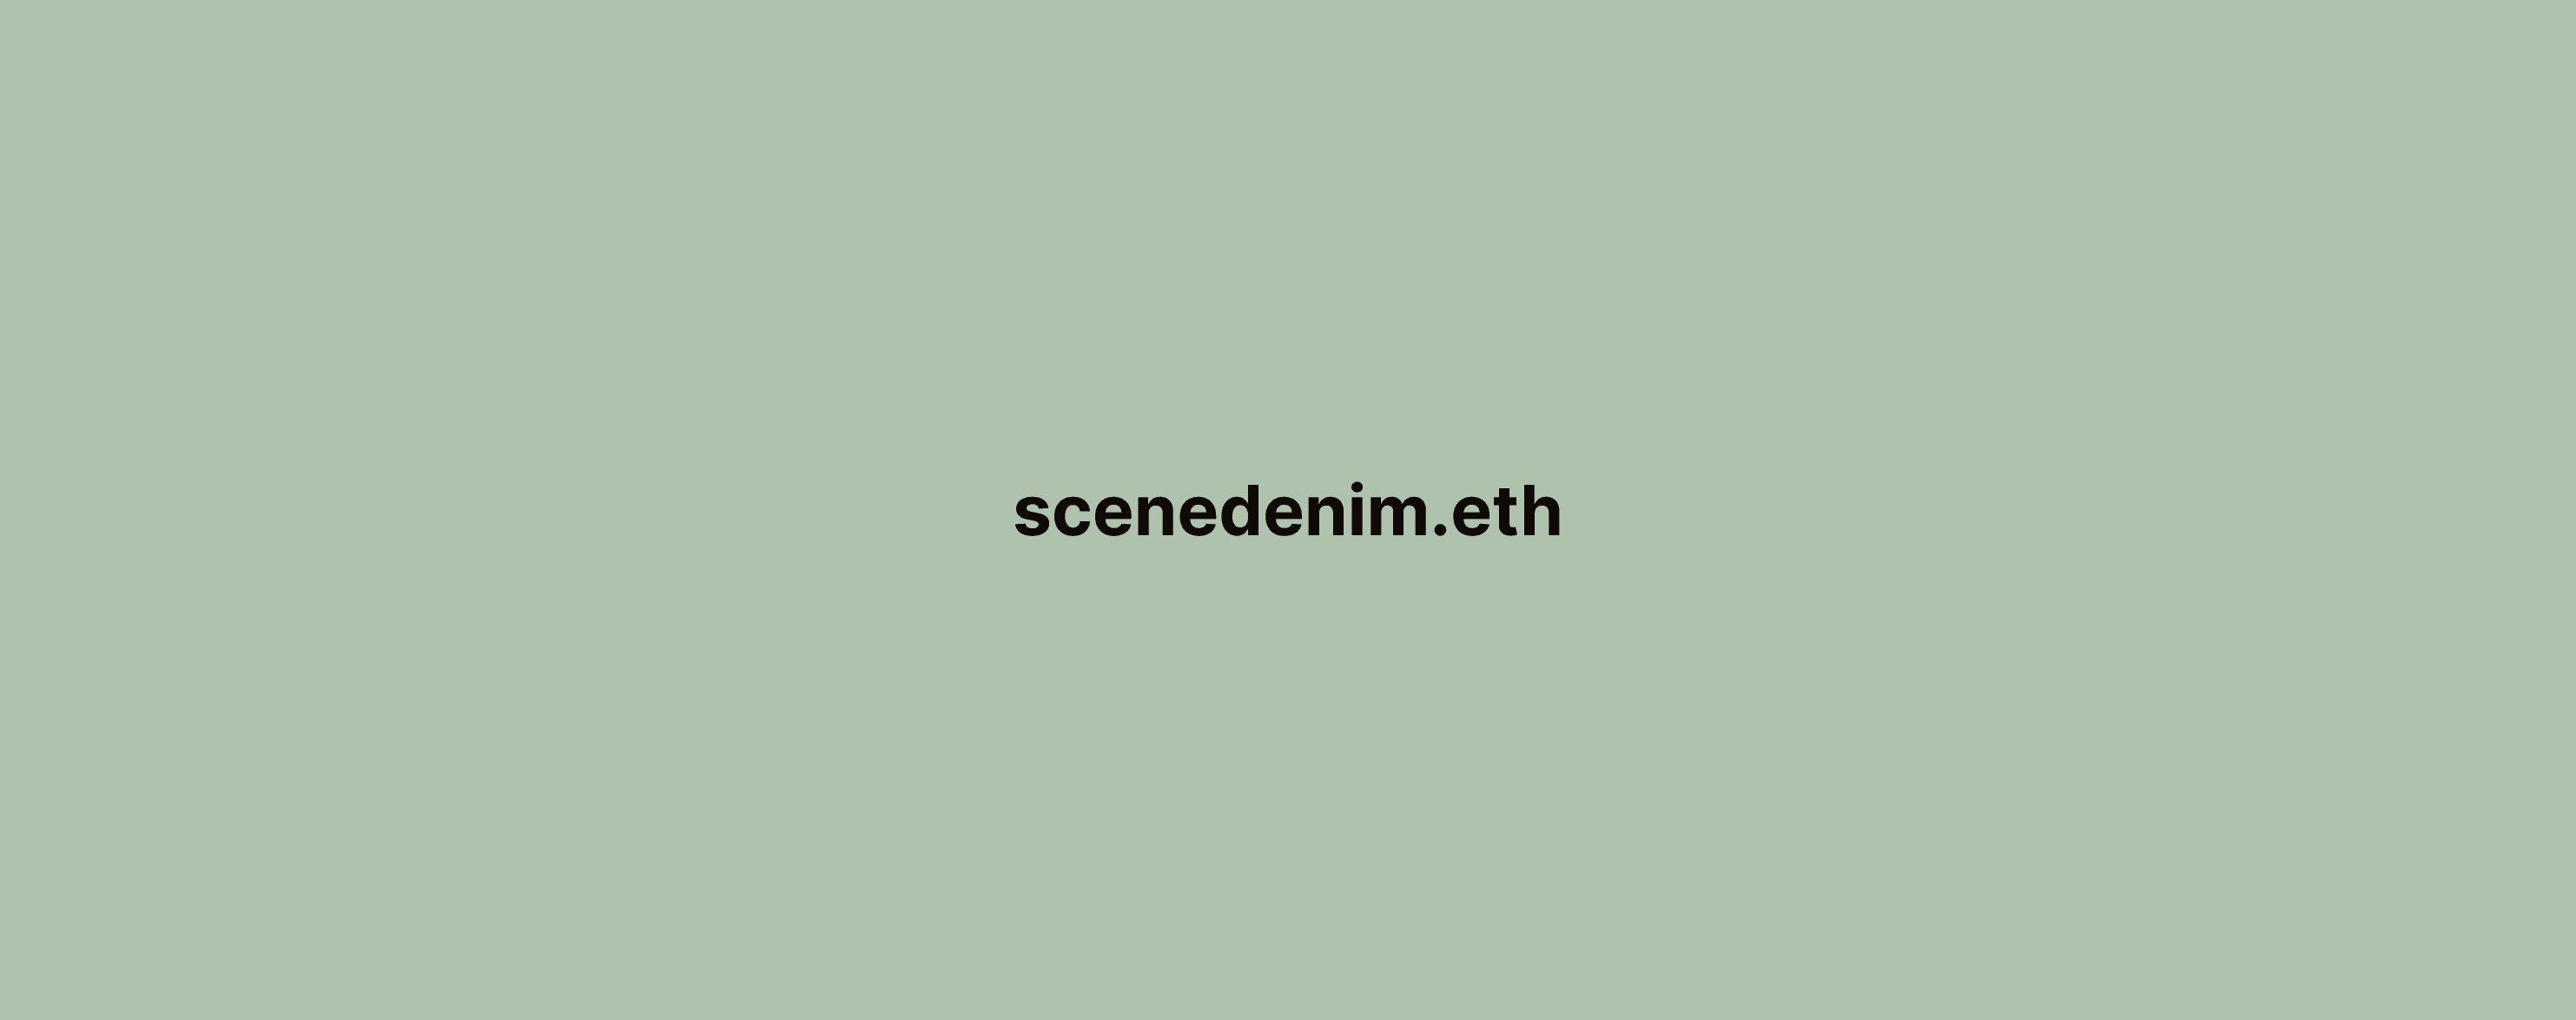 SceneDenim banner